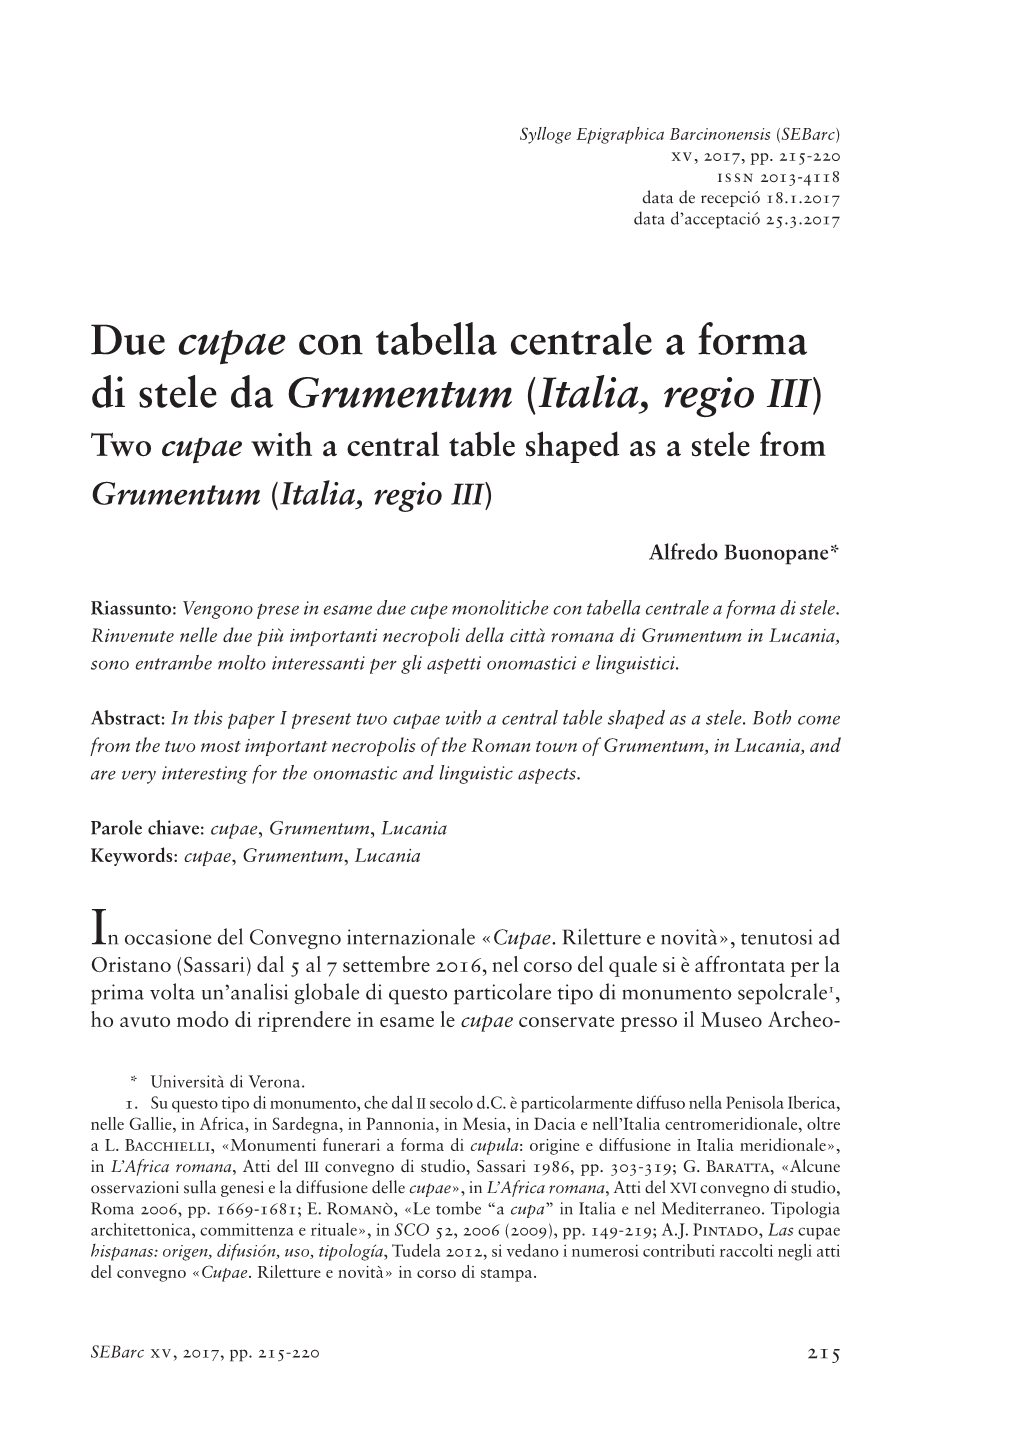 Due Cupae Con Tabella Centrale a Forma Di Stele Da Grumentum (Italia, Regio III) Two Cupae with a Central Table Shaped As a Stele from Grumentum (Italia, Regio III)